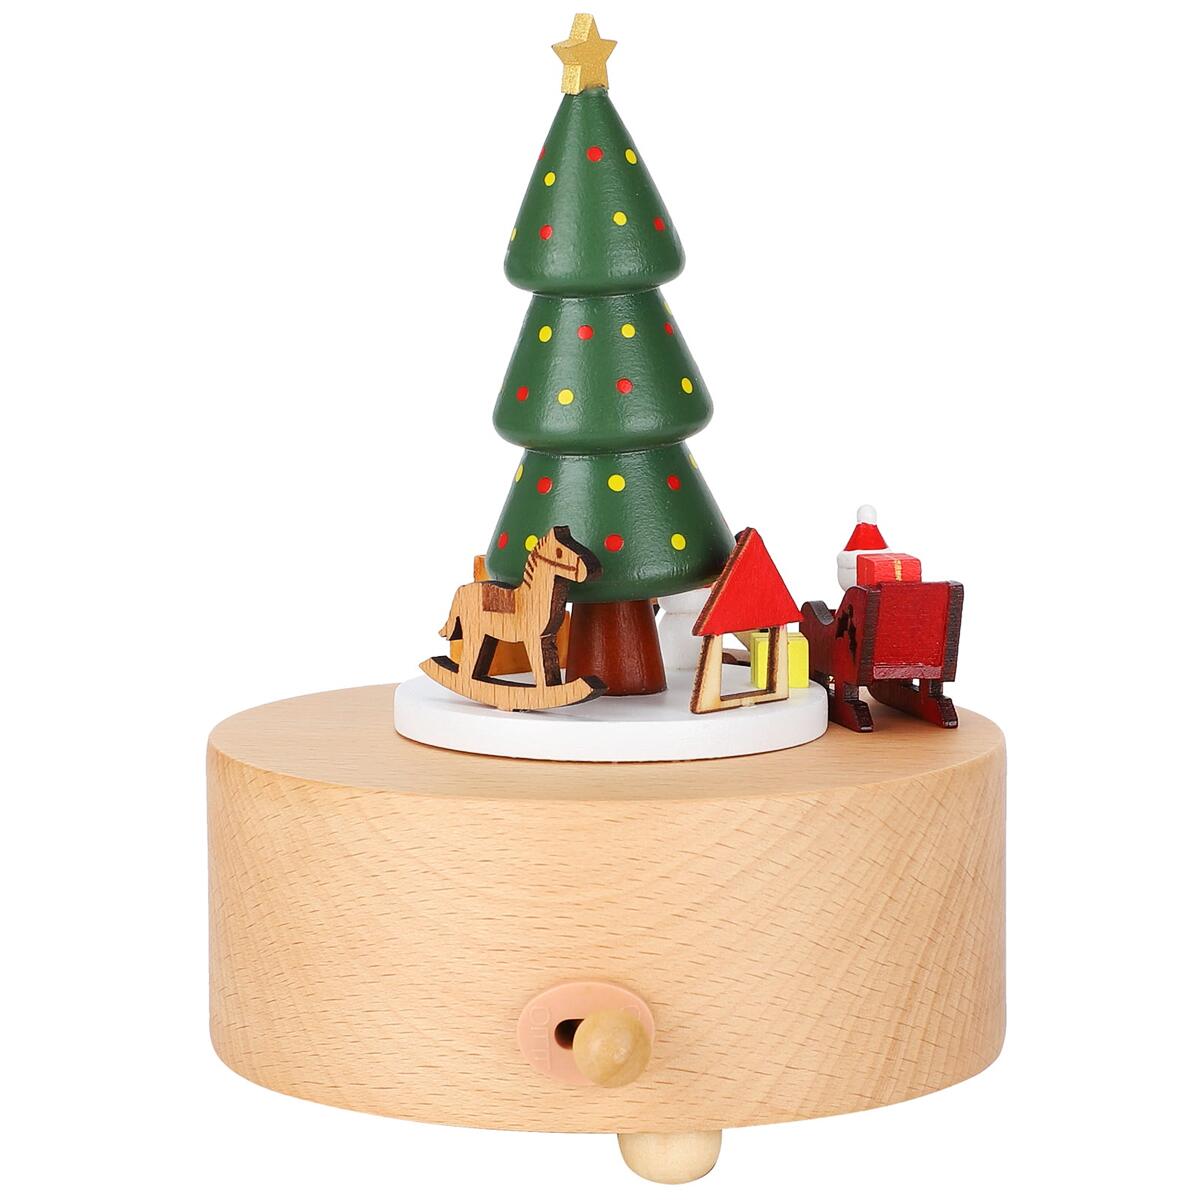 Santa sleigh and Christmas Tree (Melody: We Wish You a Merry Christmas)